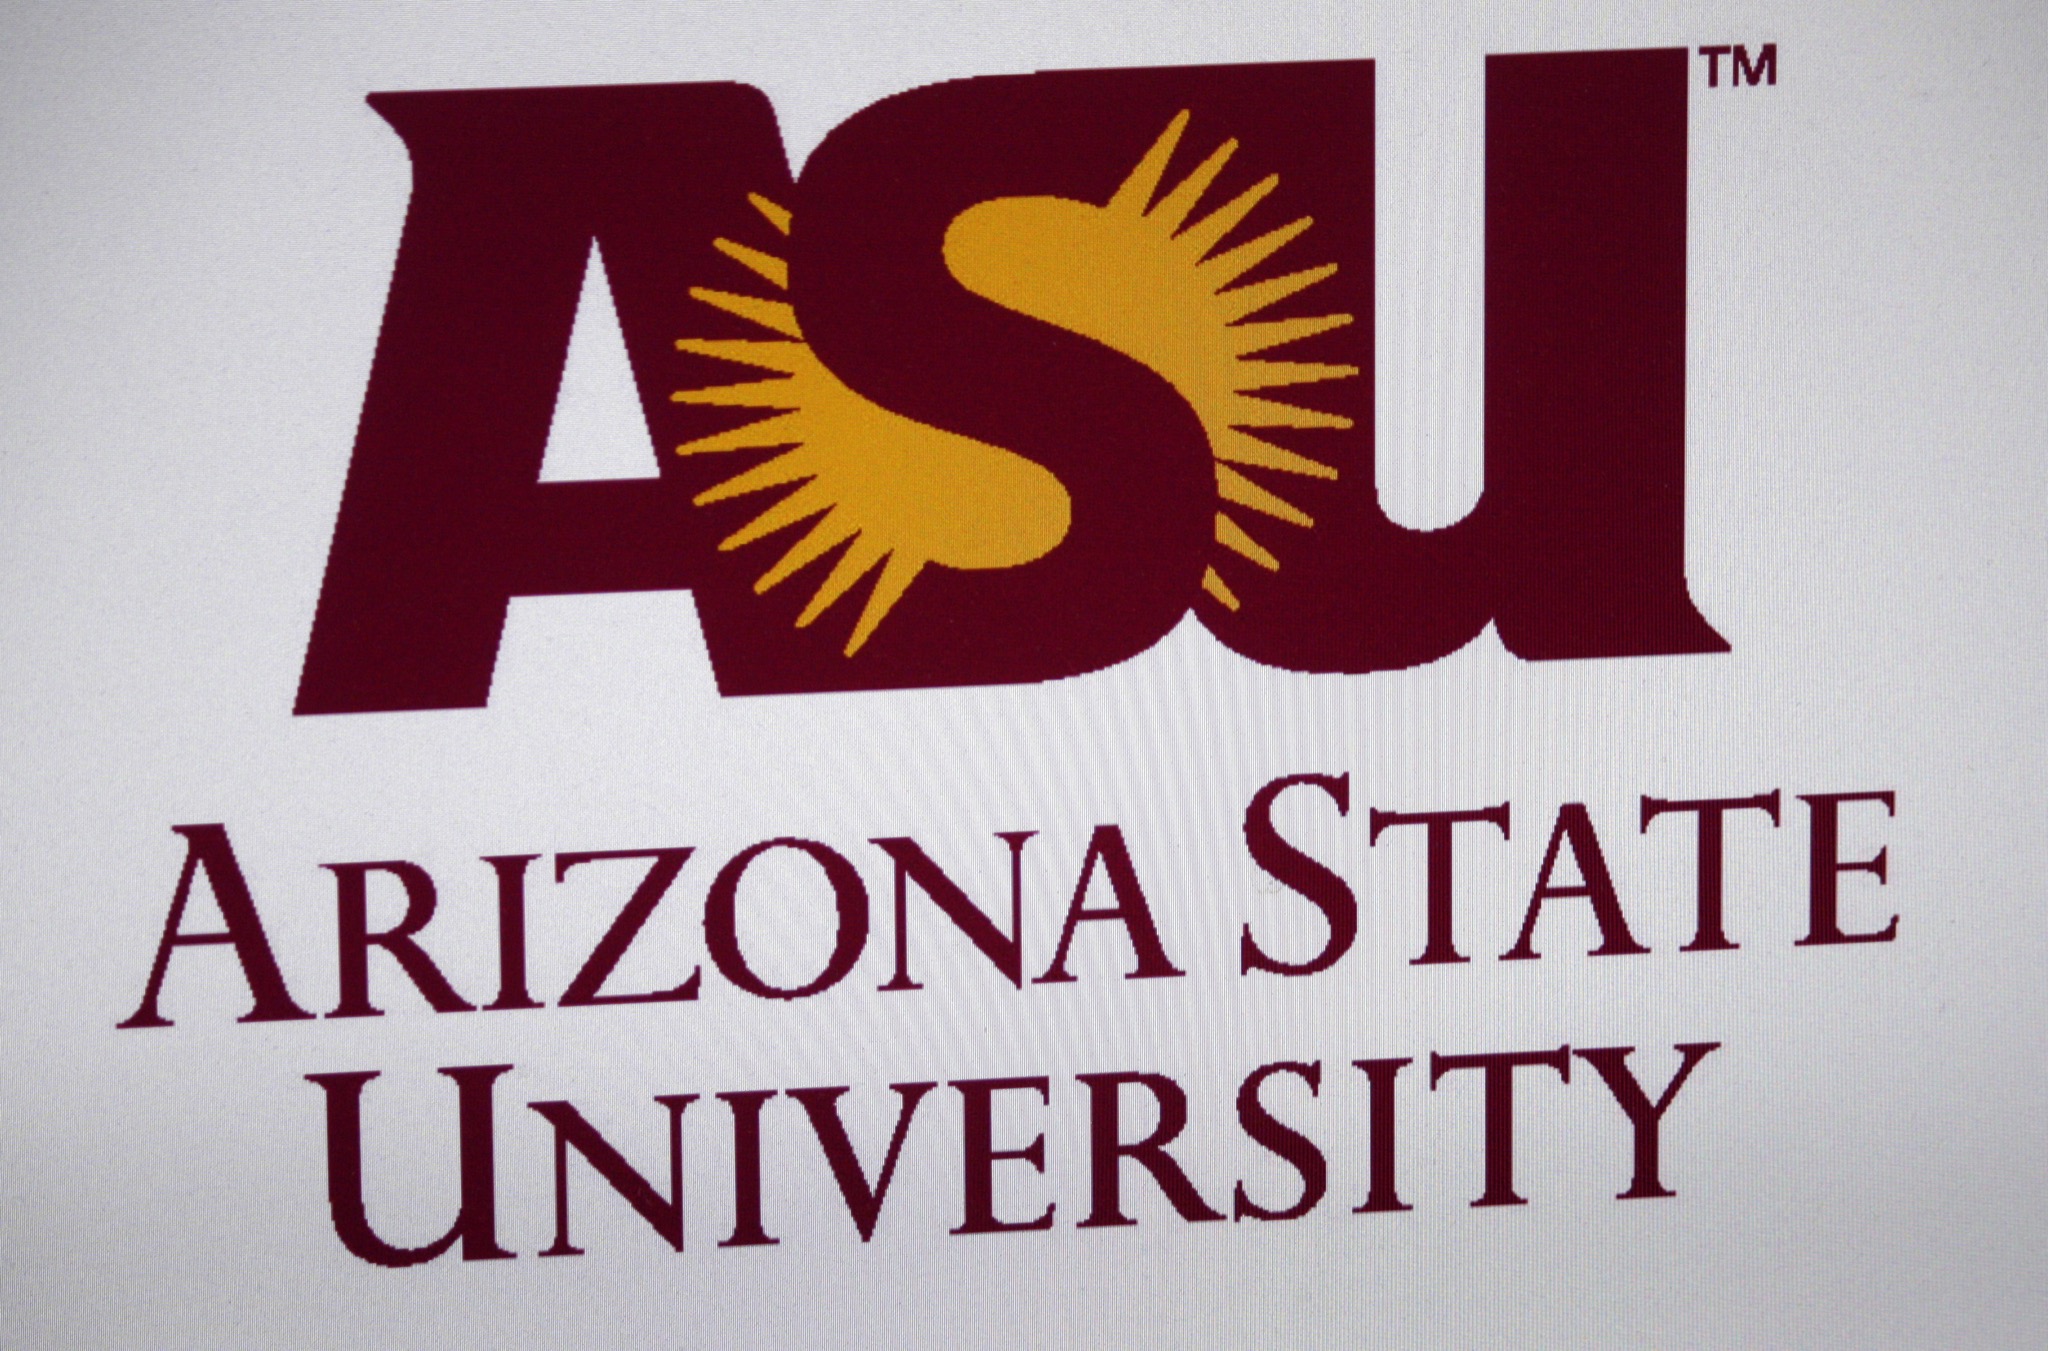 Arizona State Football Team May Cut Scholarship Players